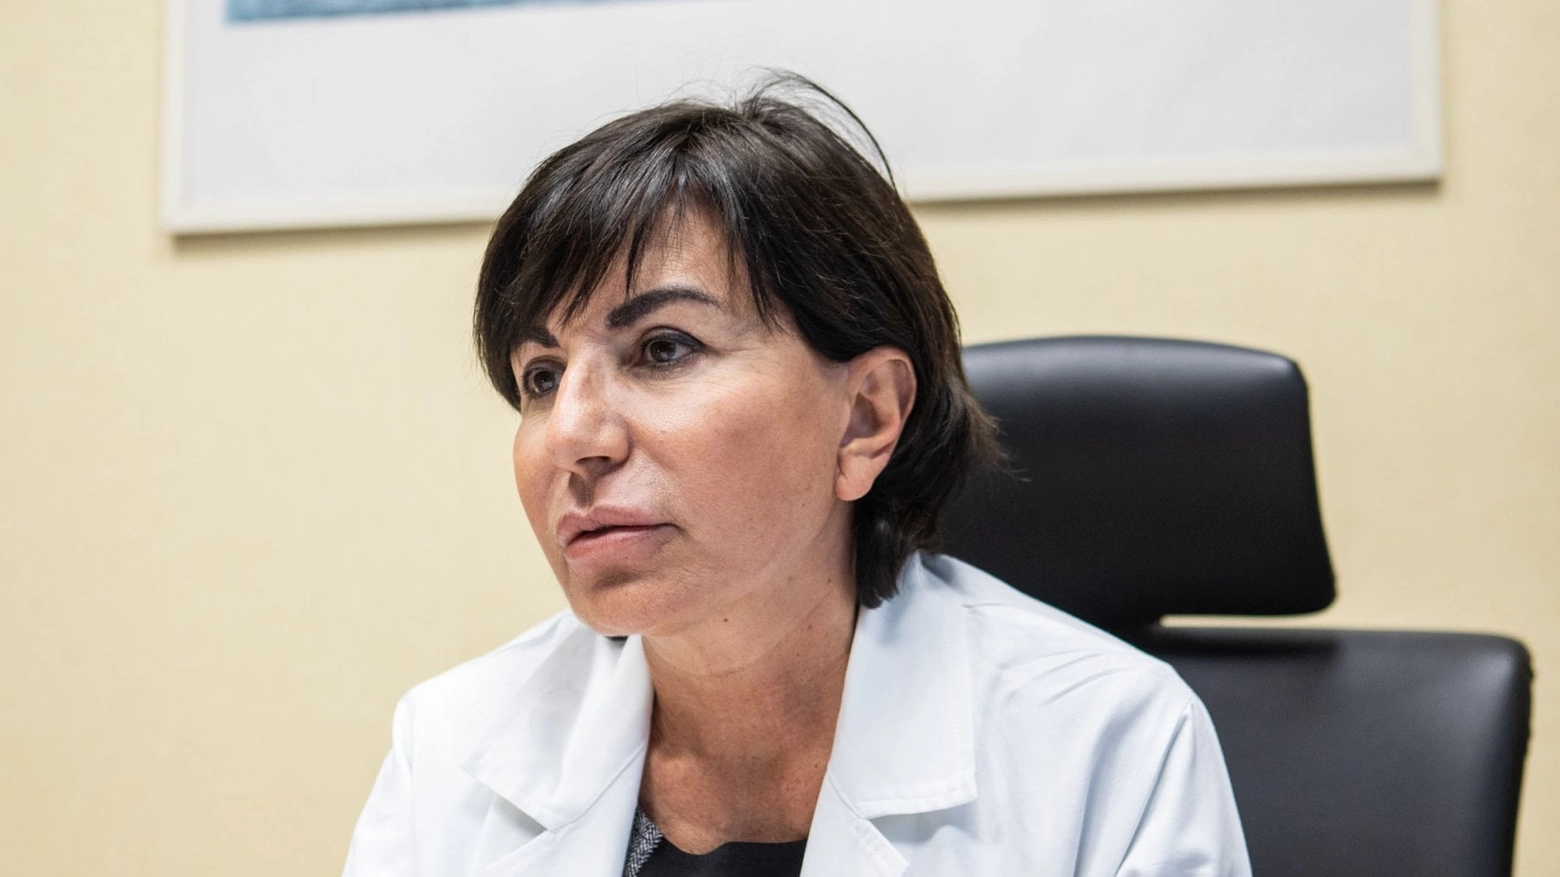 La virologa e microbiologa Maria Rita Gismondo